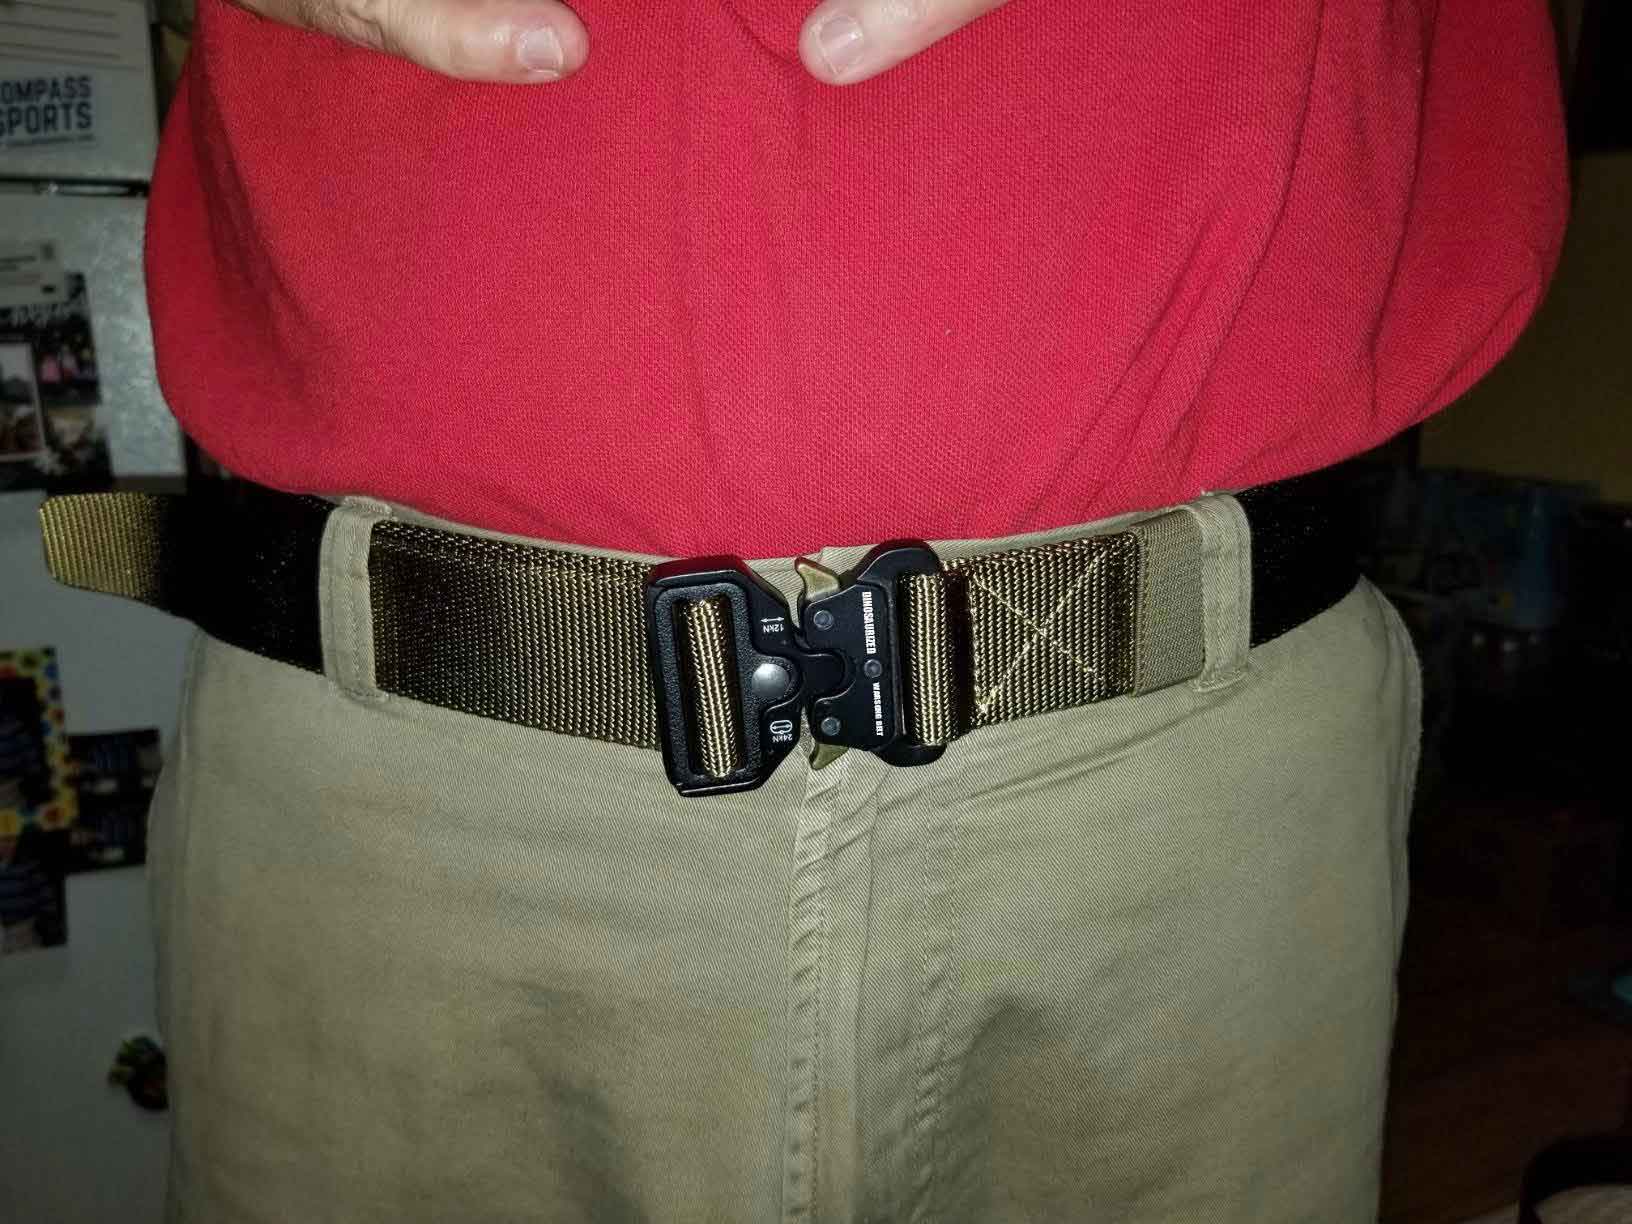  the best tactical belts